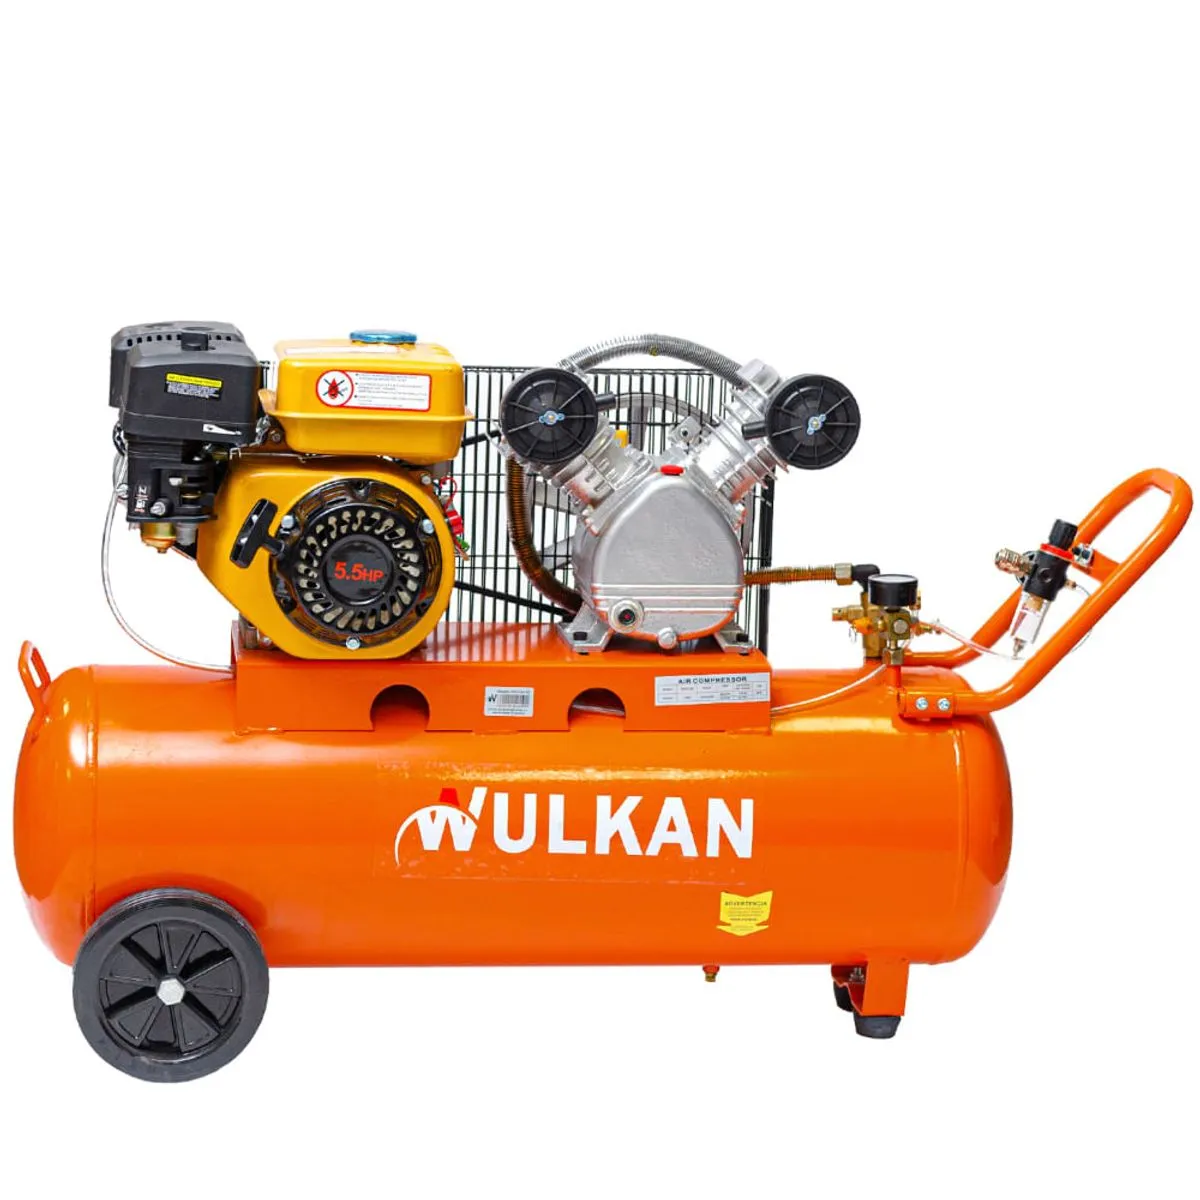 Compresor Wulkan 100LTS Autonomo WK-CG-100